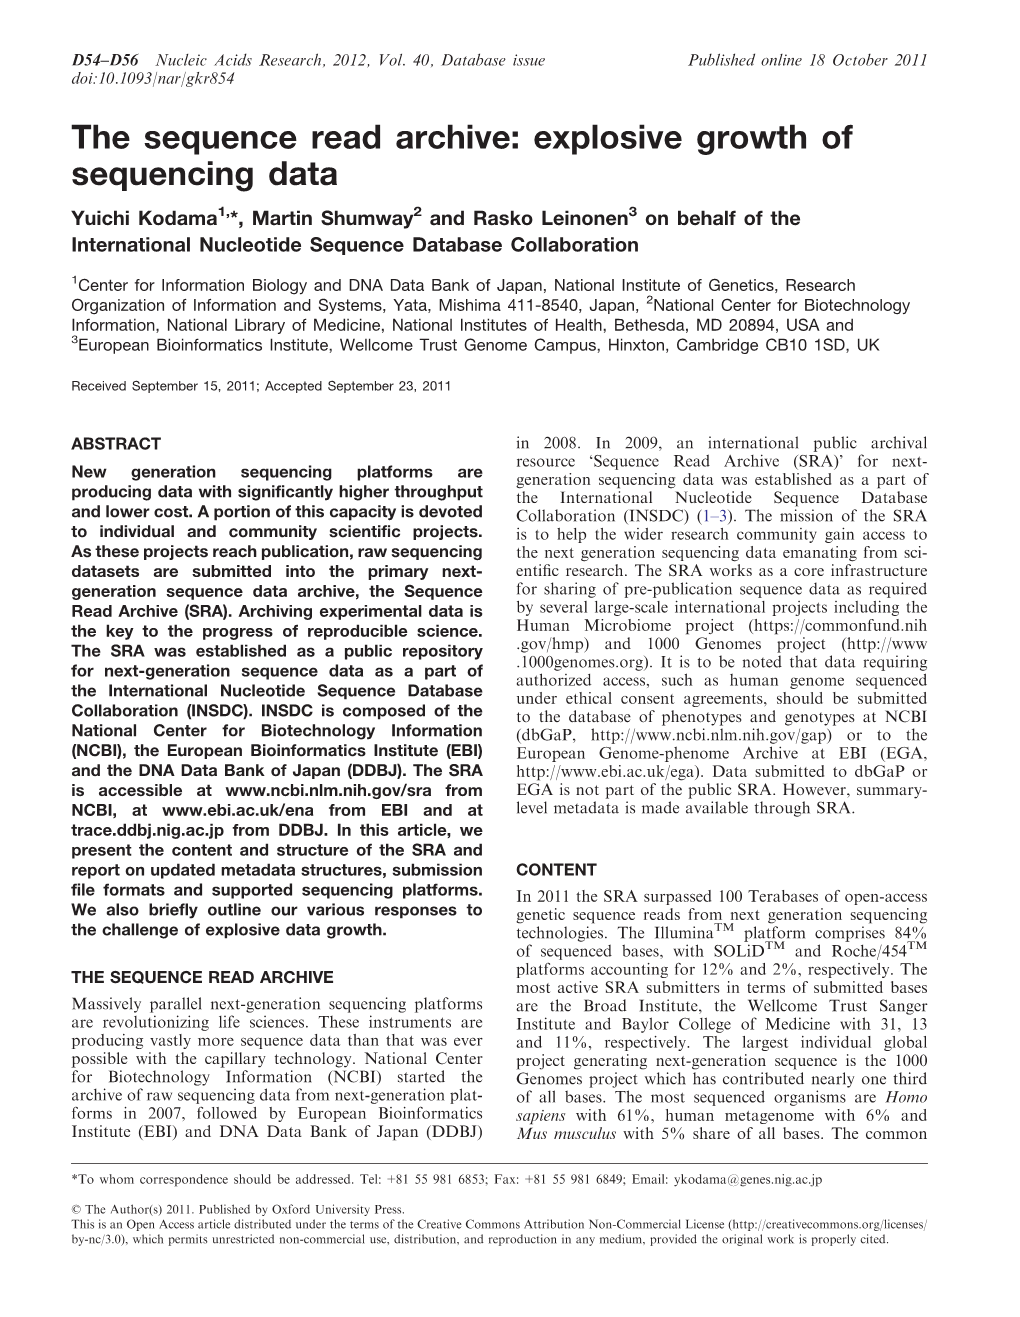 Explosive Growth of Sequencing Data Yuichi Kodama1,*, Martin Shumway2 and Rasko Leinonen3 on Behalf of the International Nucleotide Sequence Database Collaboration